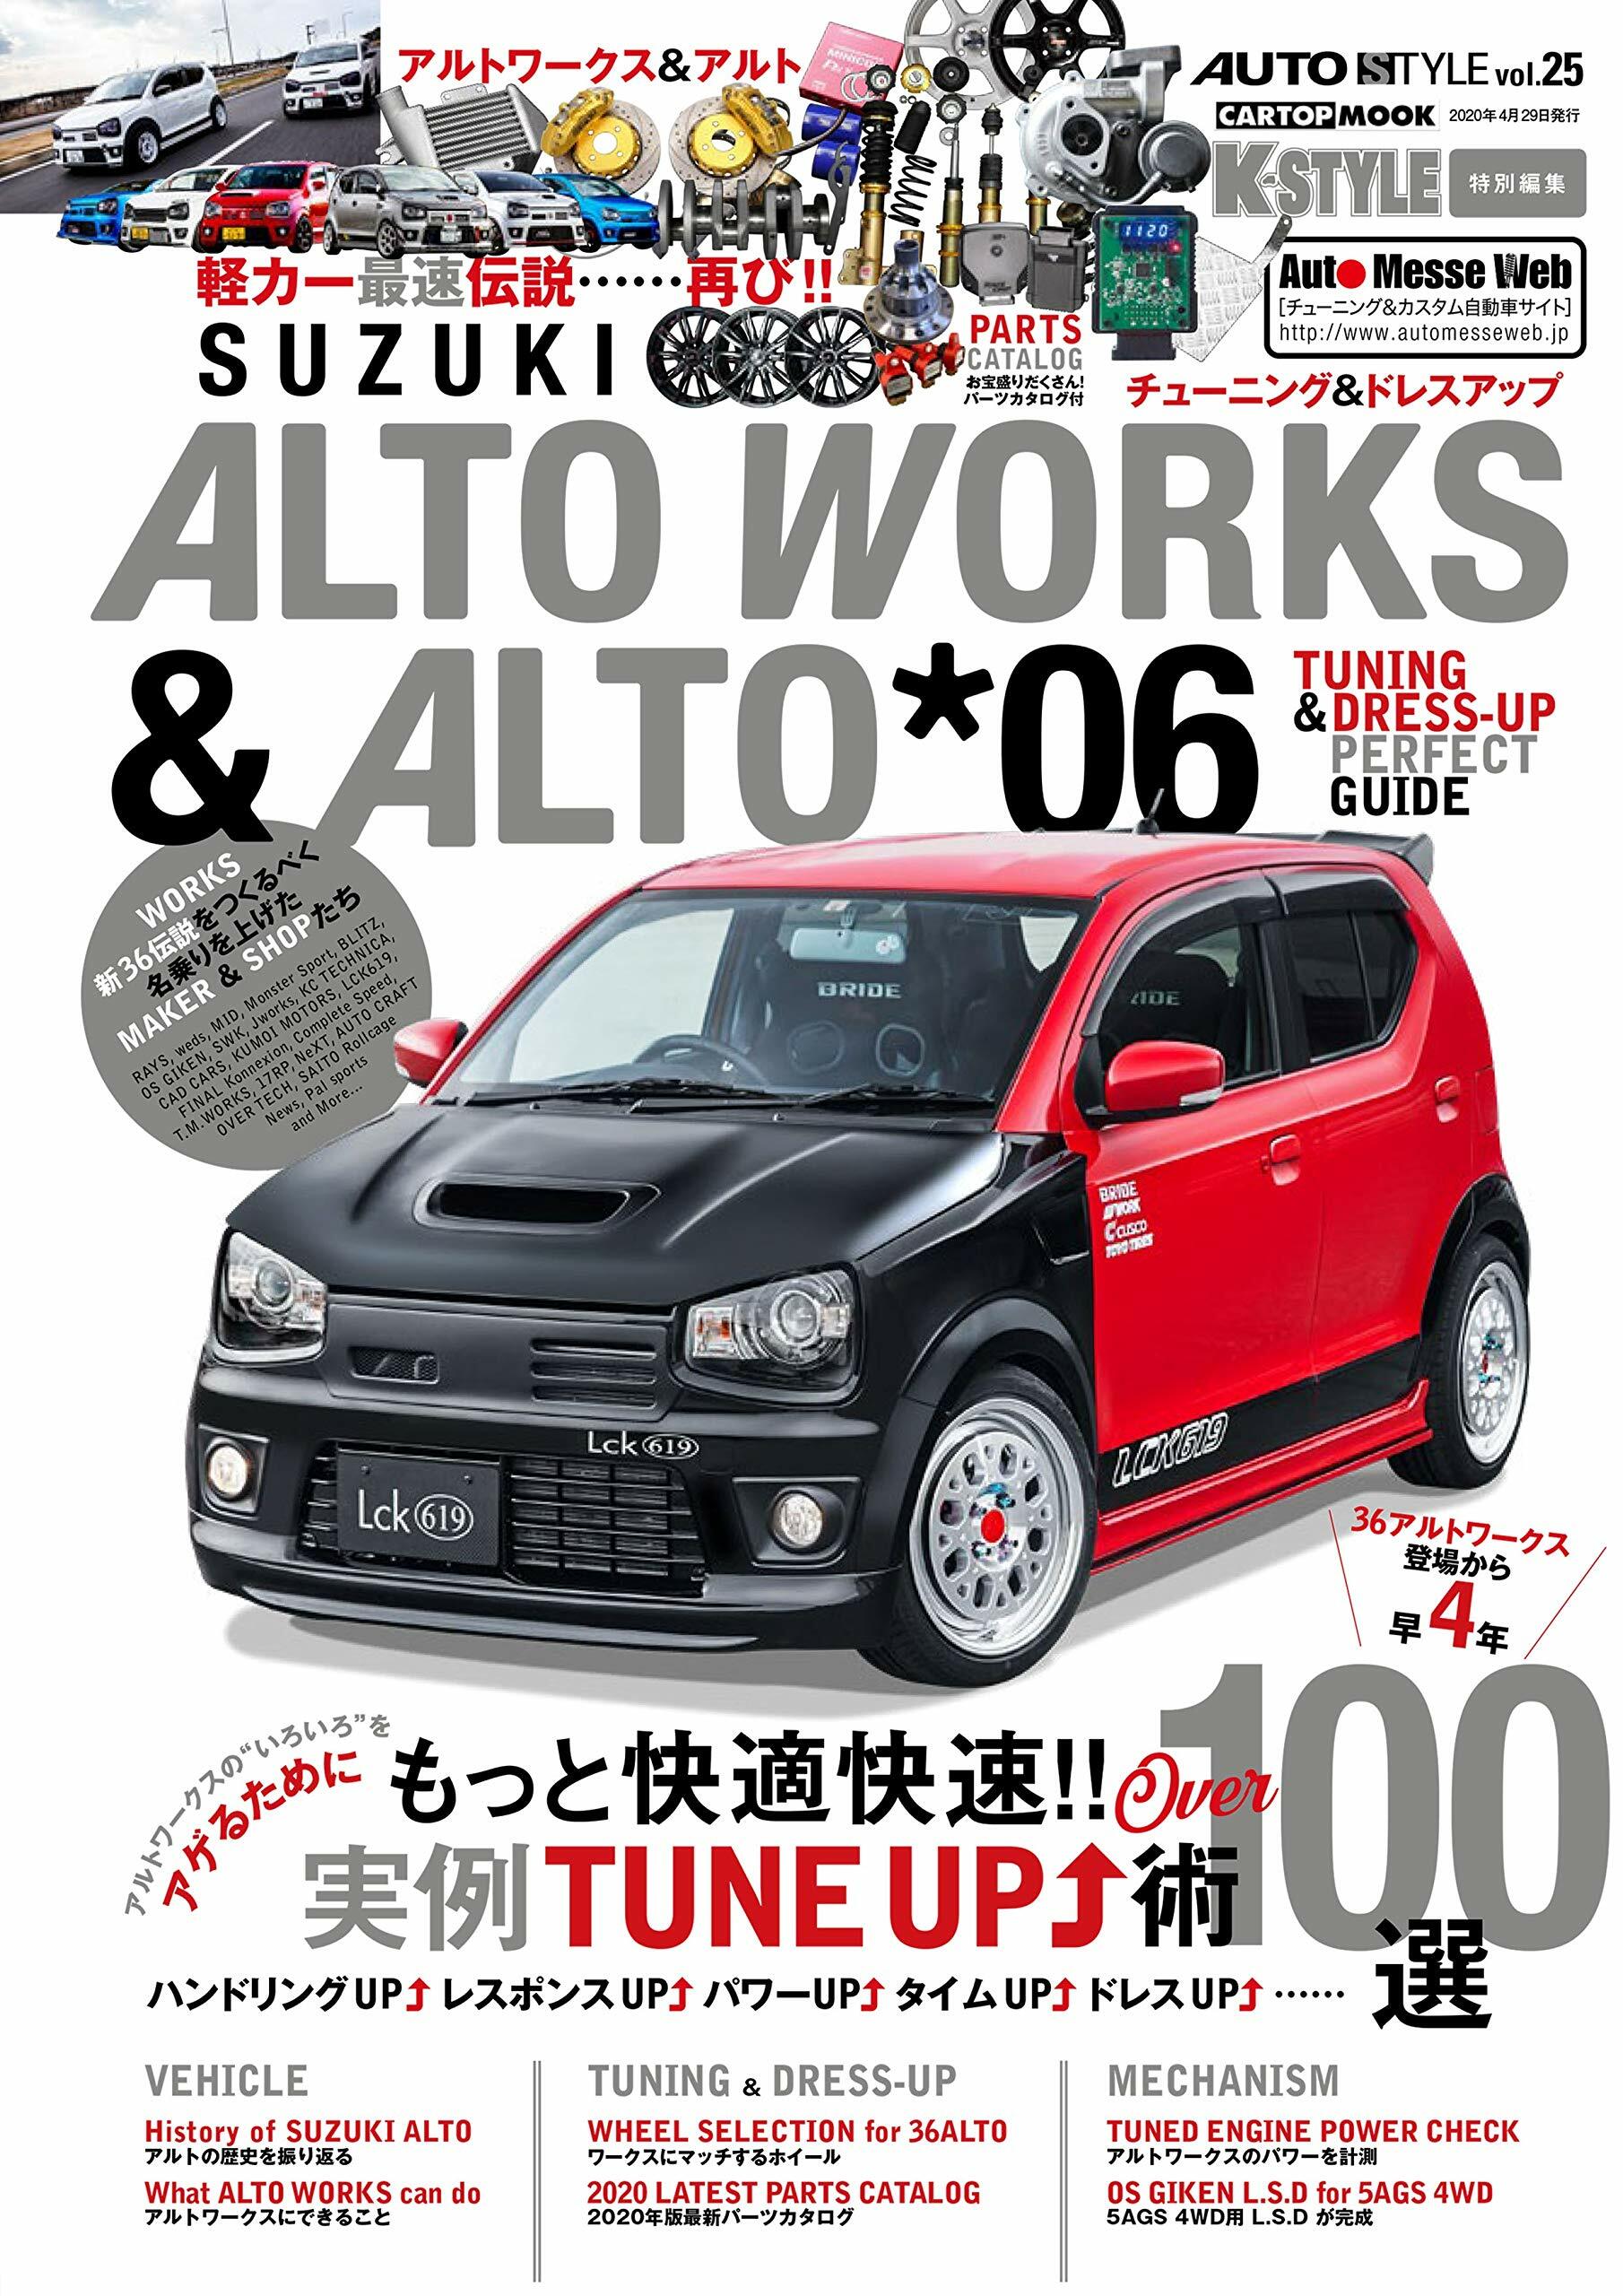 AUTO STYLE vol.25 SUZUKI ALTO WORKS&ALTOチュ-ニング&ドレスアップガイド*06 (CARTOPMOOK)